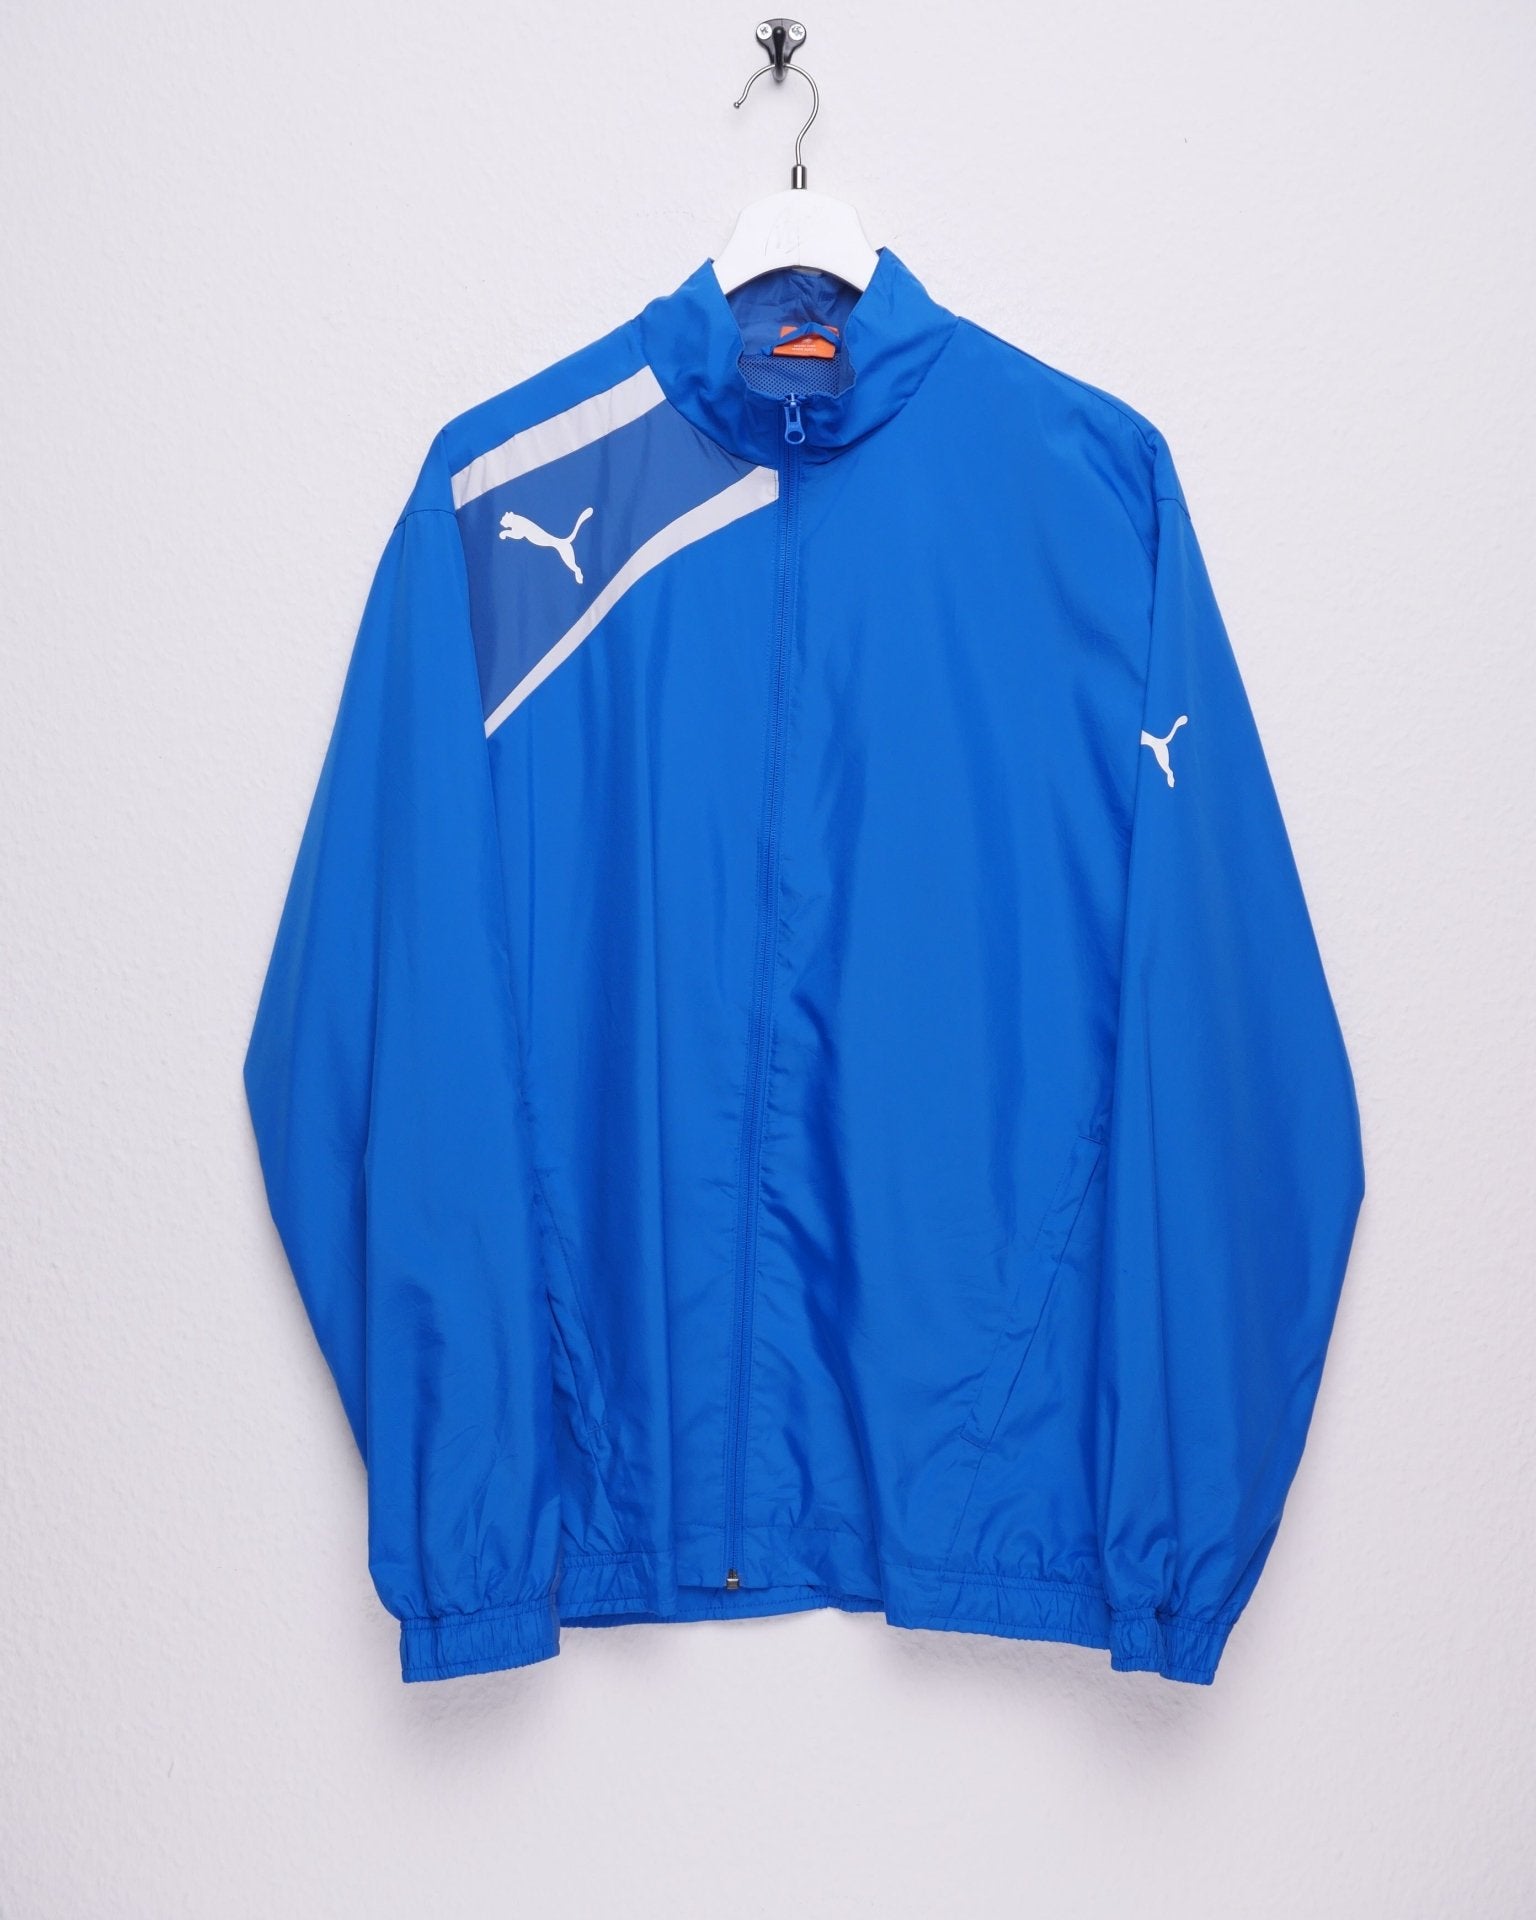 Puma printed Logo blue Track Jacket - Peeces